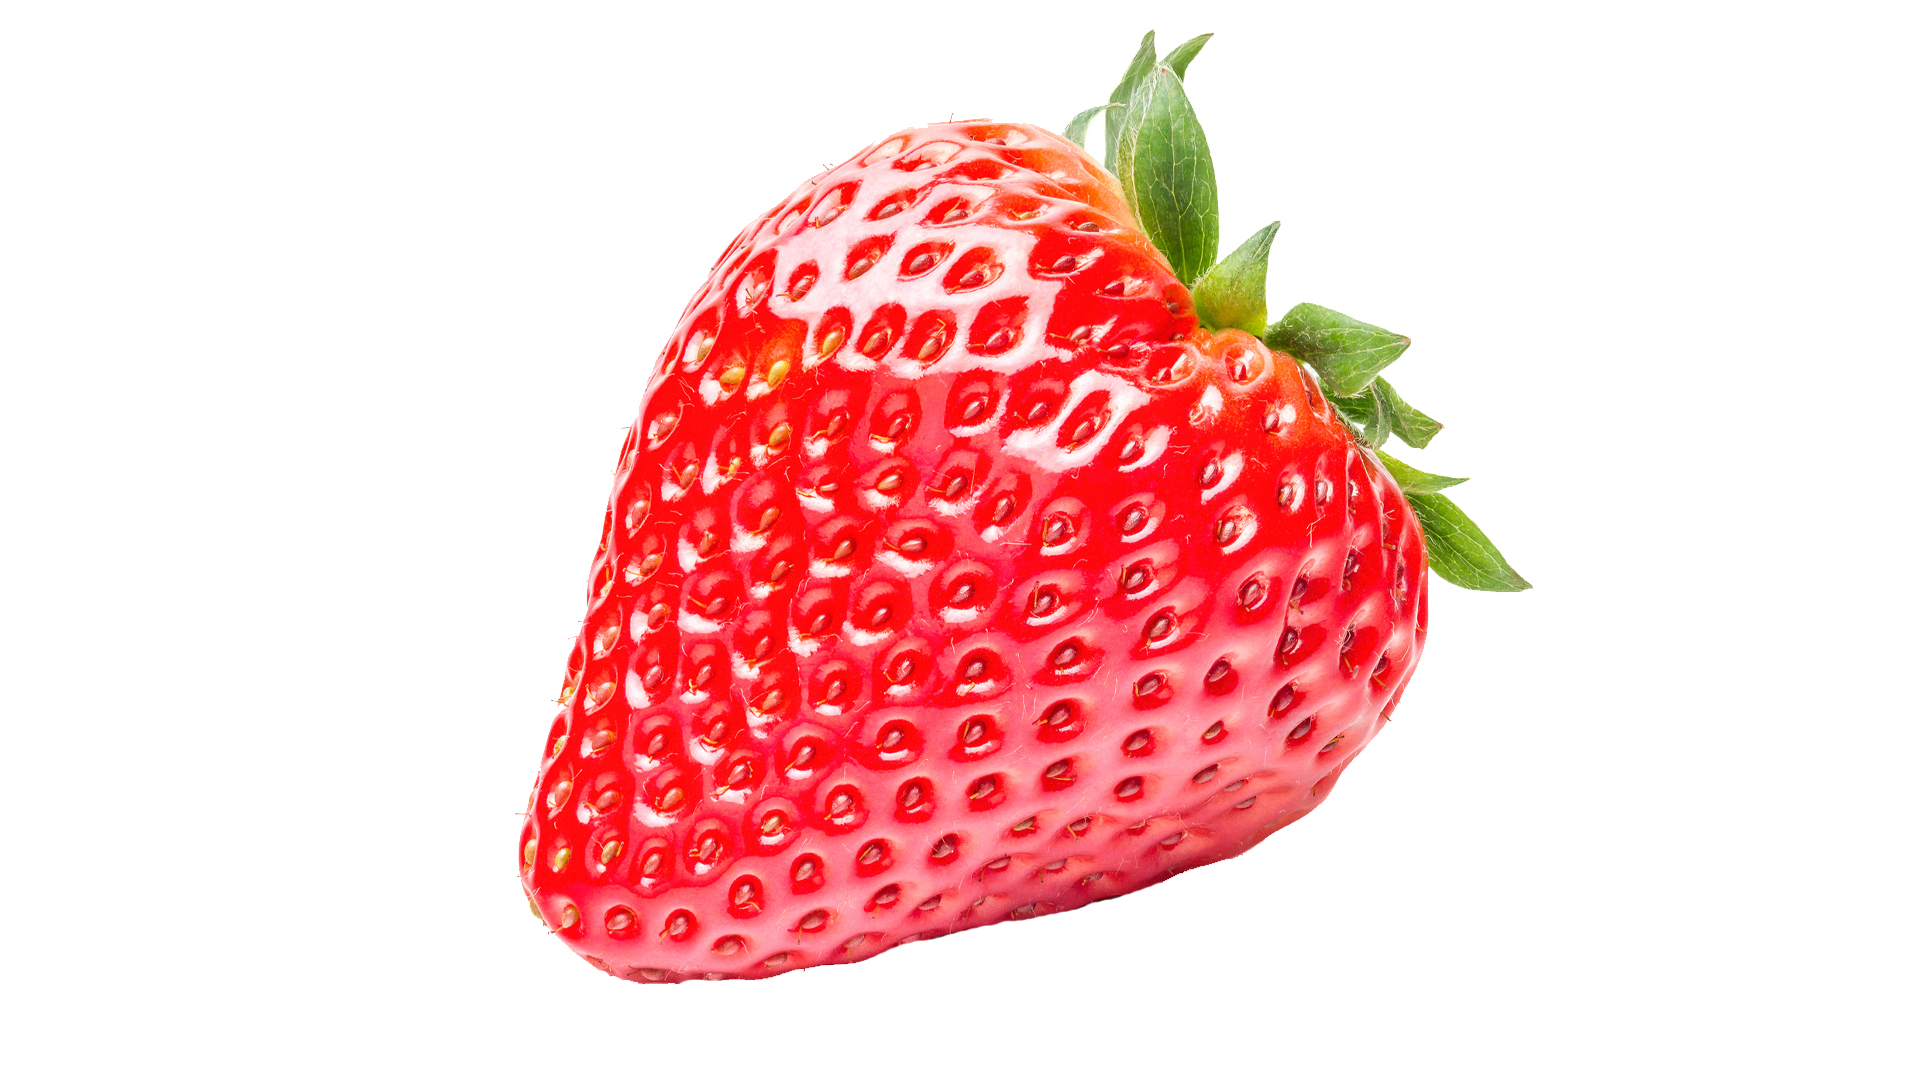 Strawberry 2